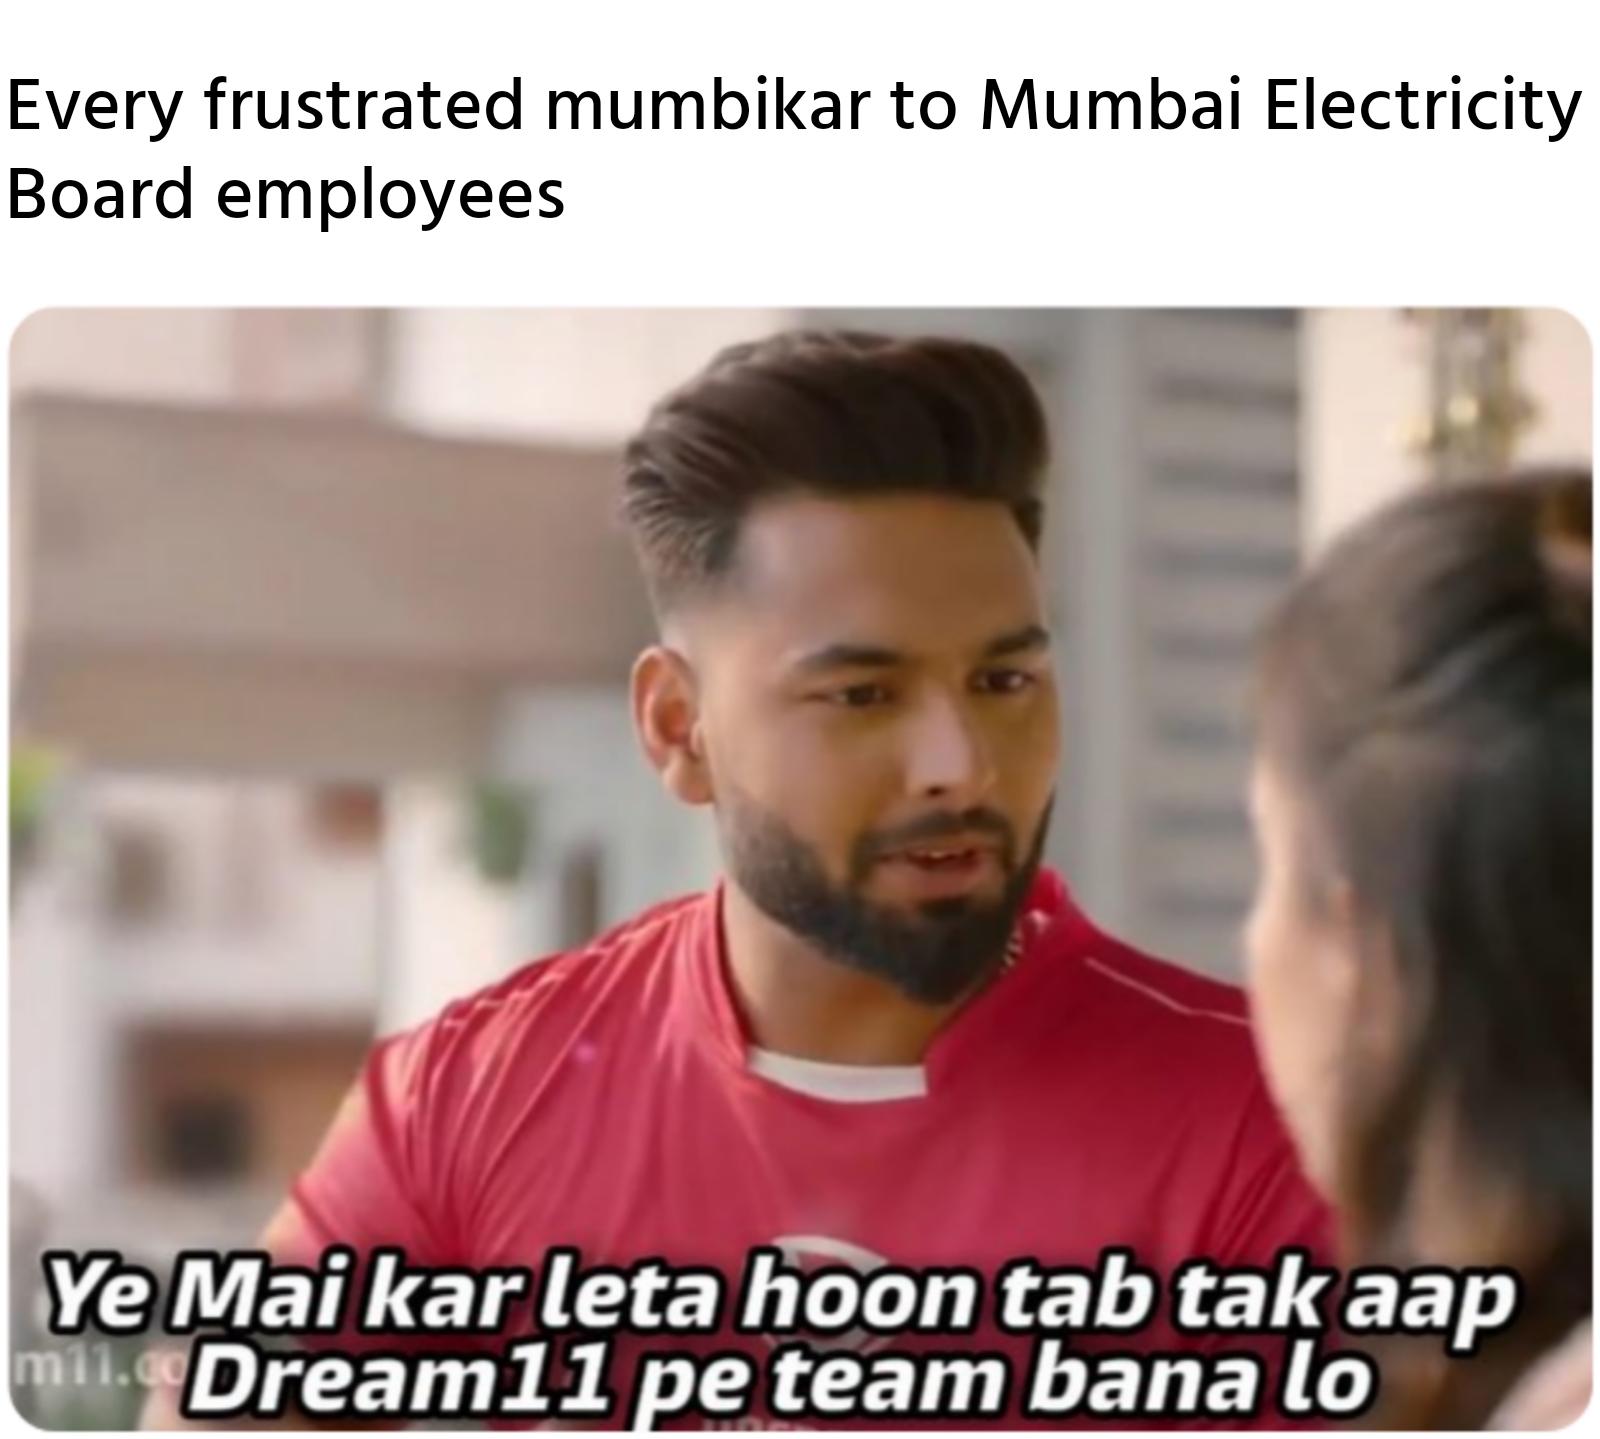 Every frustrated Mumbaikar to Mumbai Electricity Board Employees meme